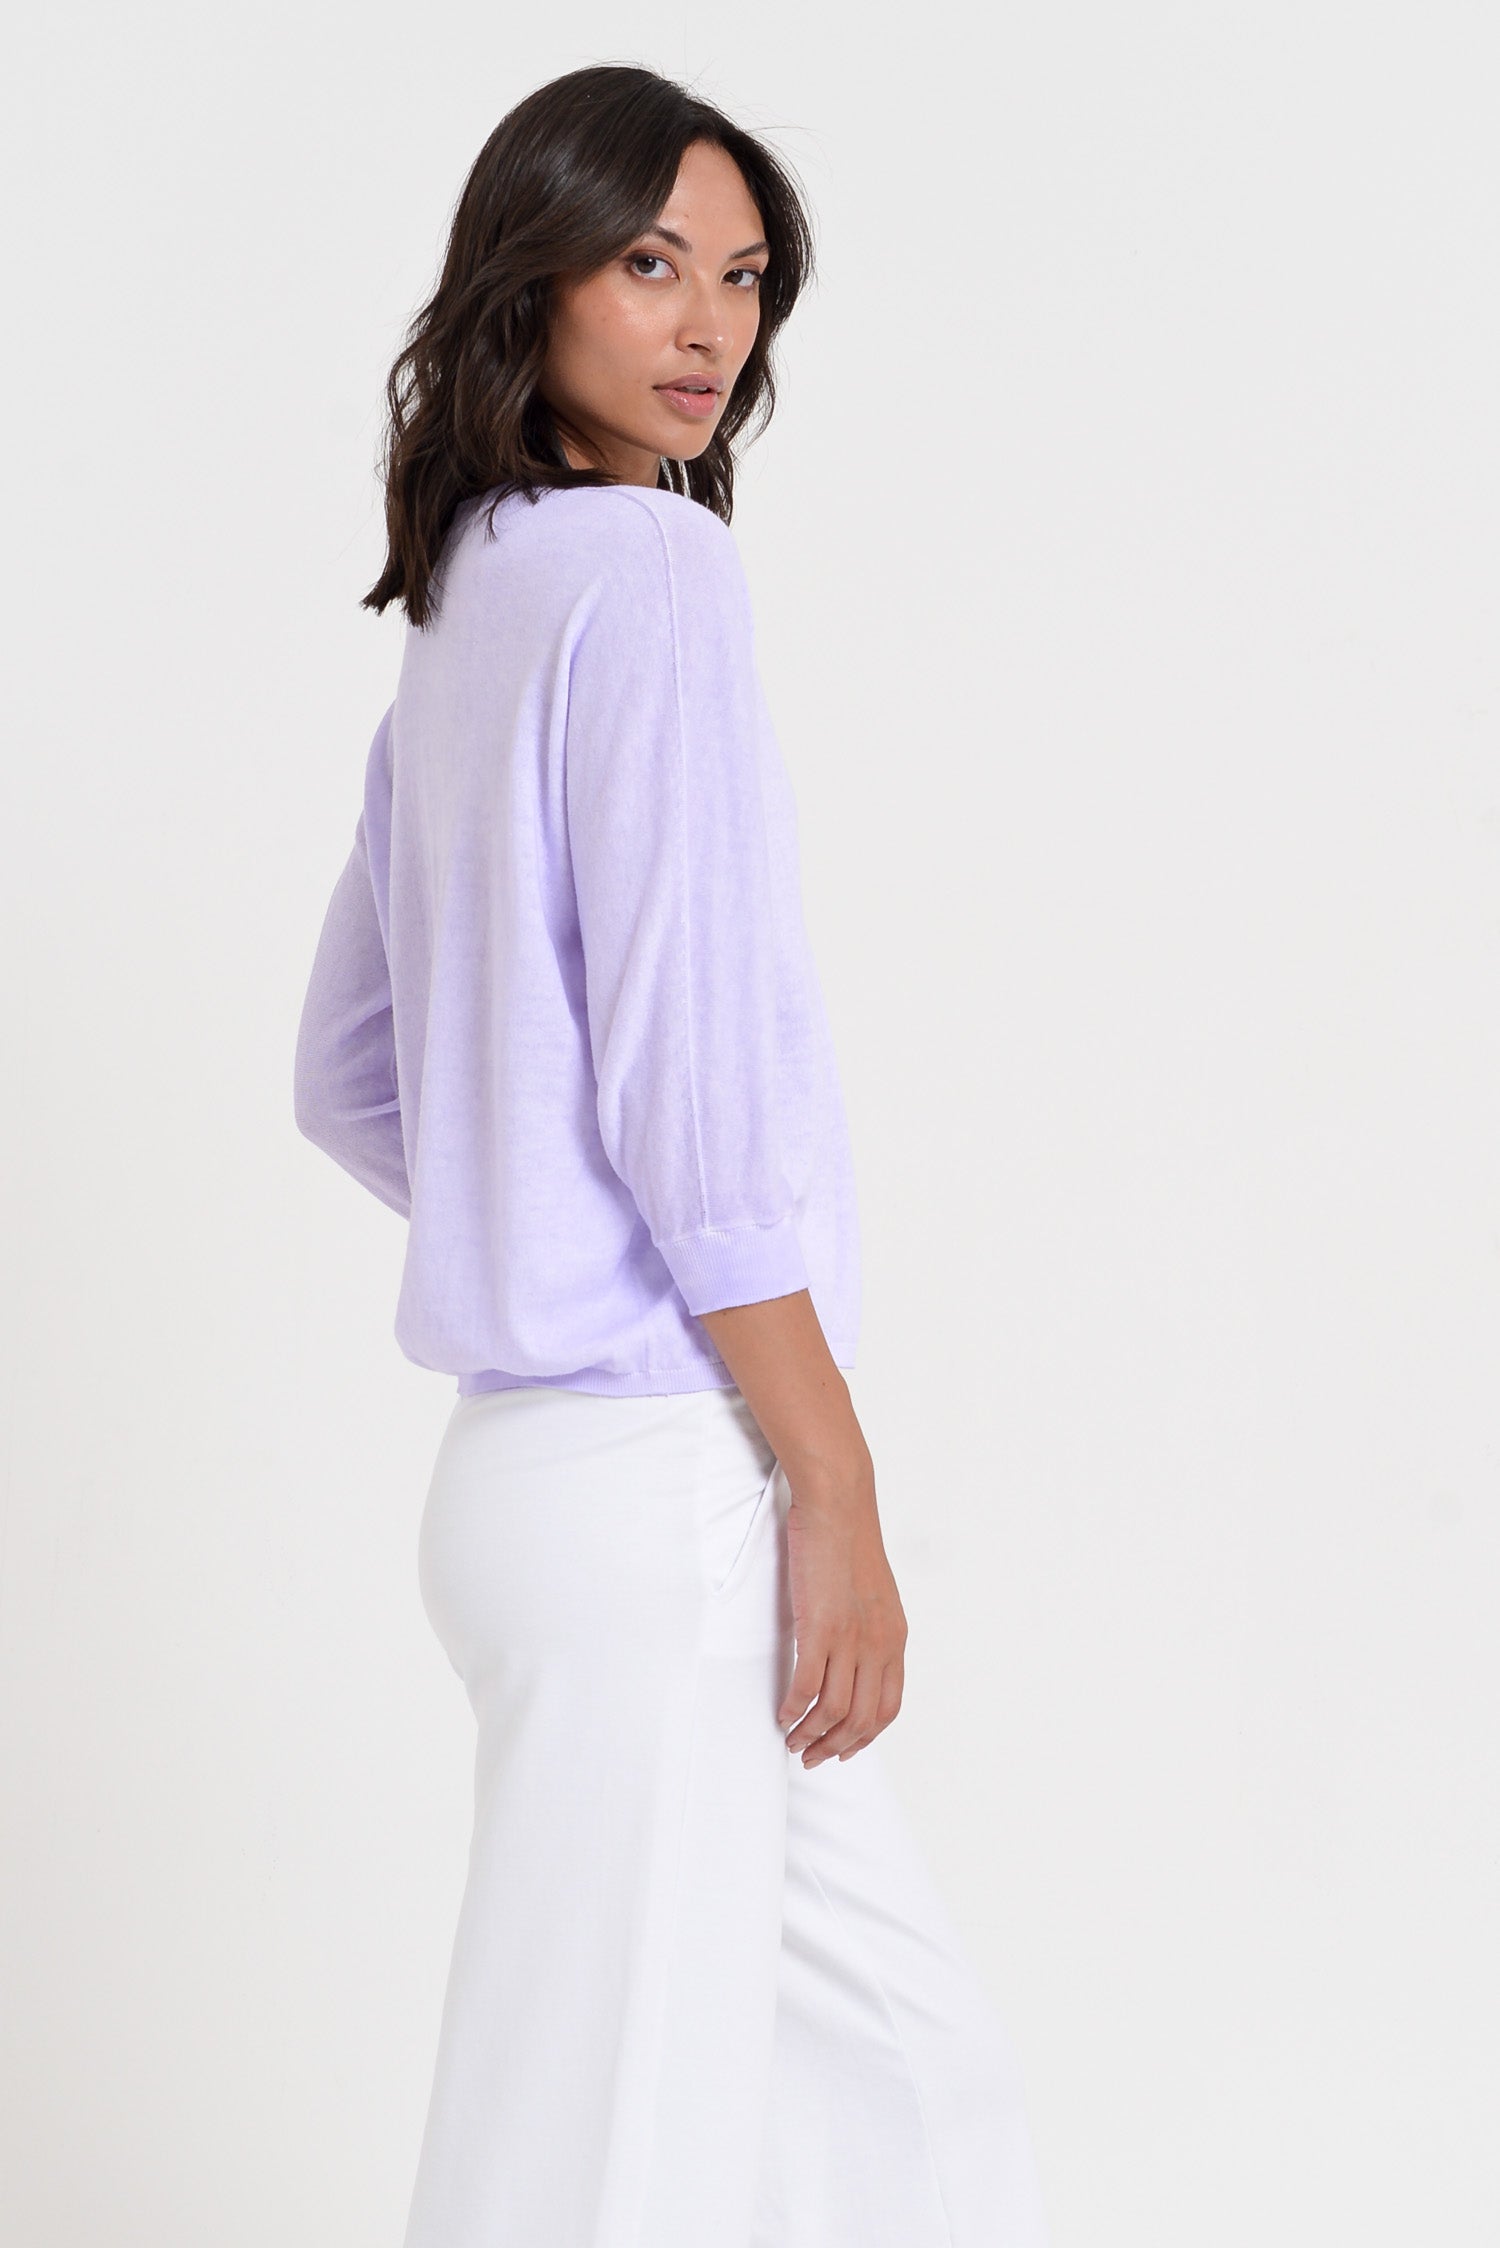 Anna V-Neck - Women's Short Sleeve Knit Sweater - Lilac